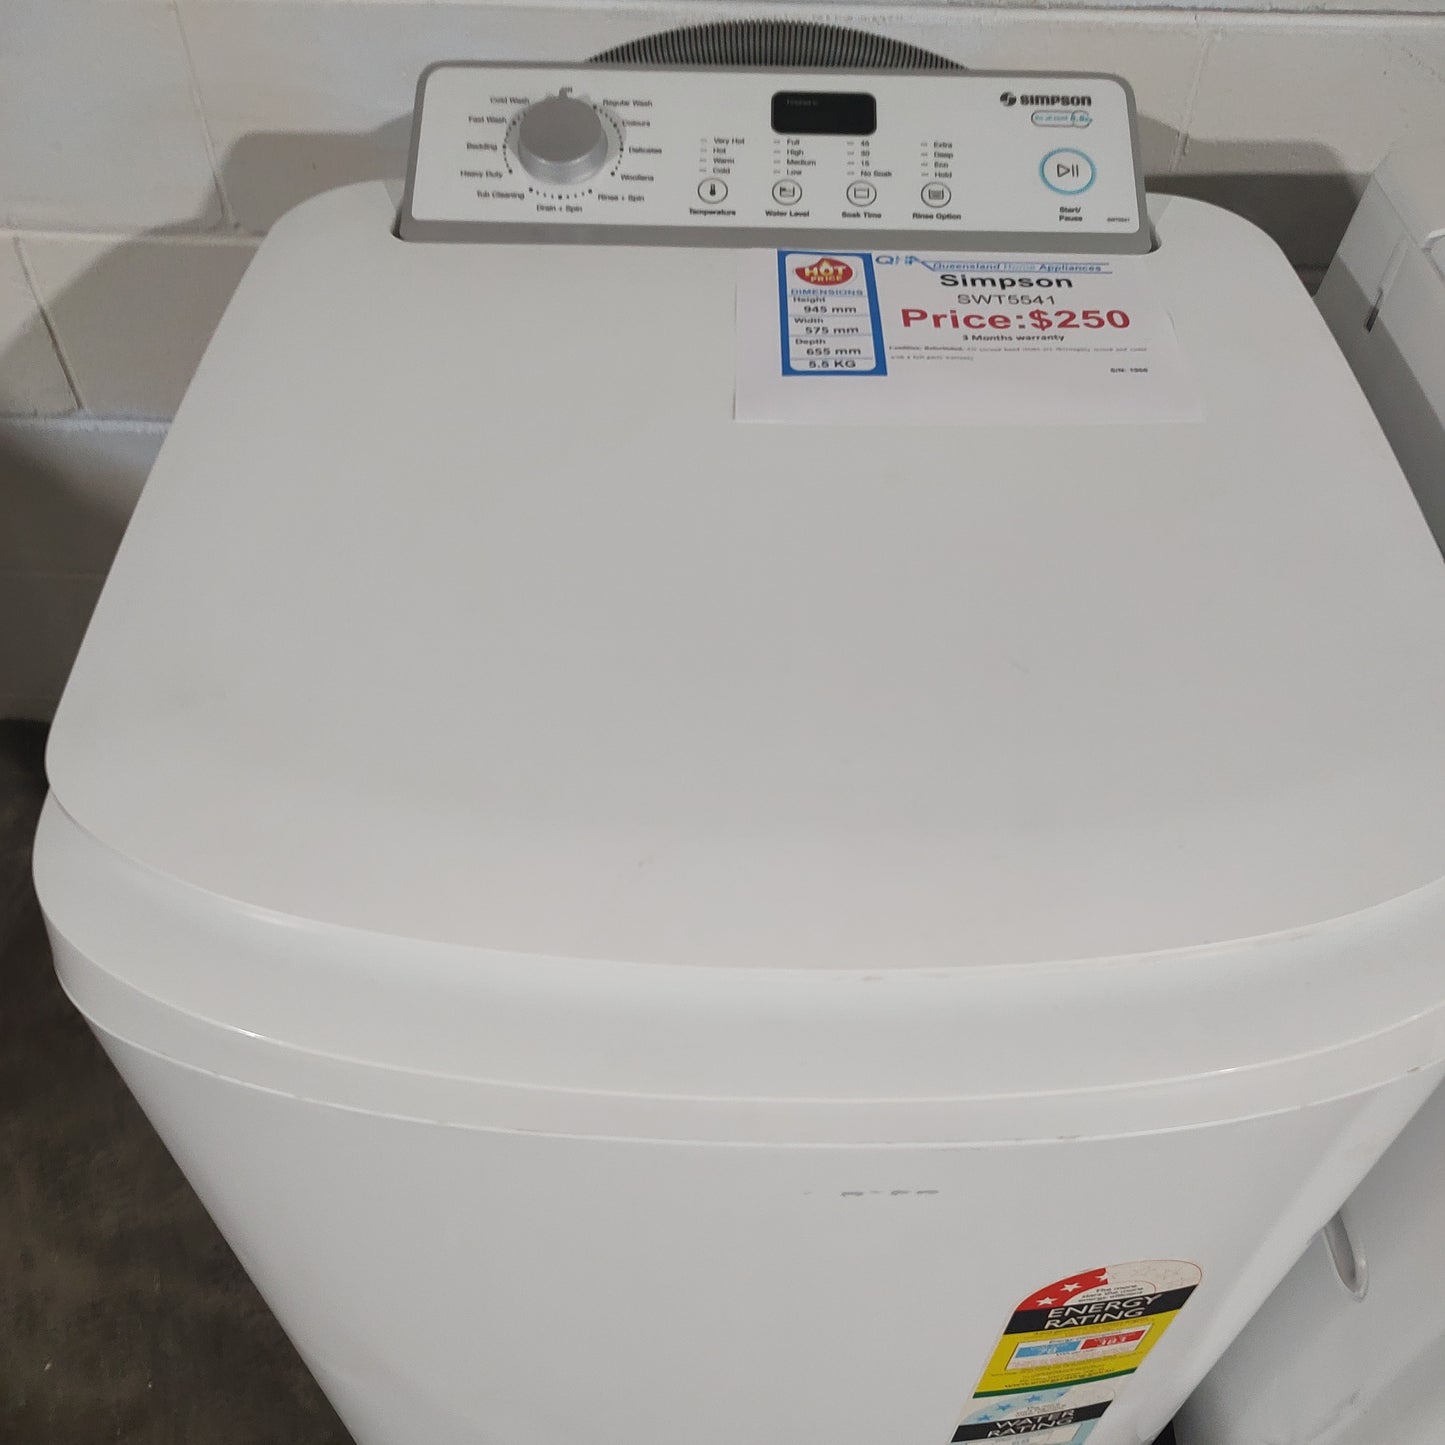 Simpson SWT5541 5.5kg EZI Top Load Washing Machine